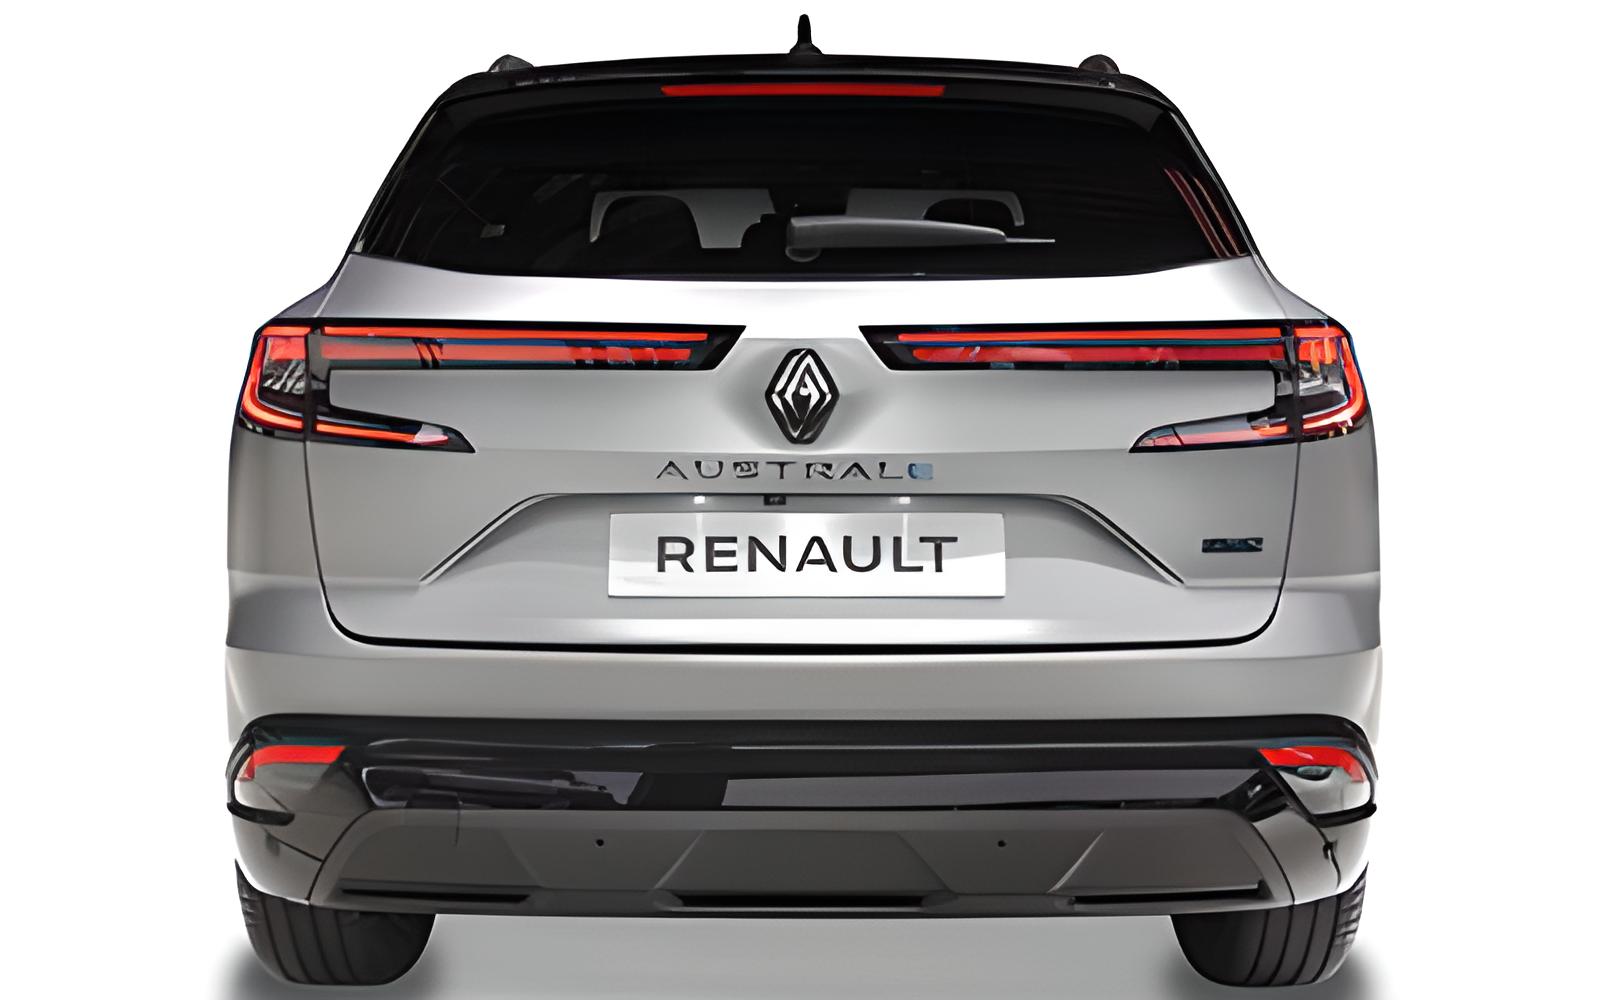 Zubehör – Austral E-Tech Full Hybrid – Renault